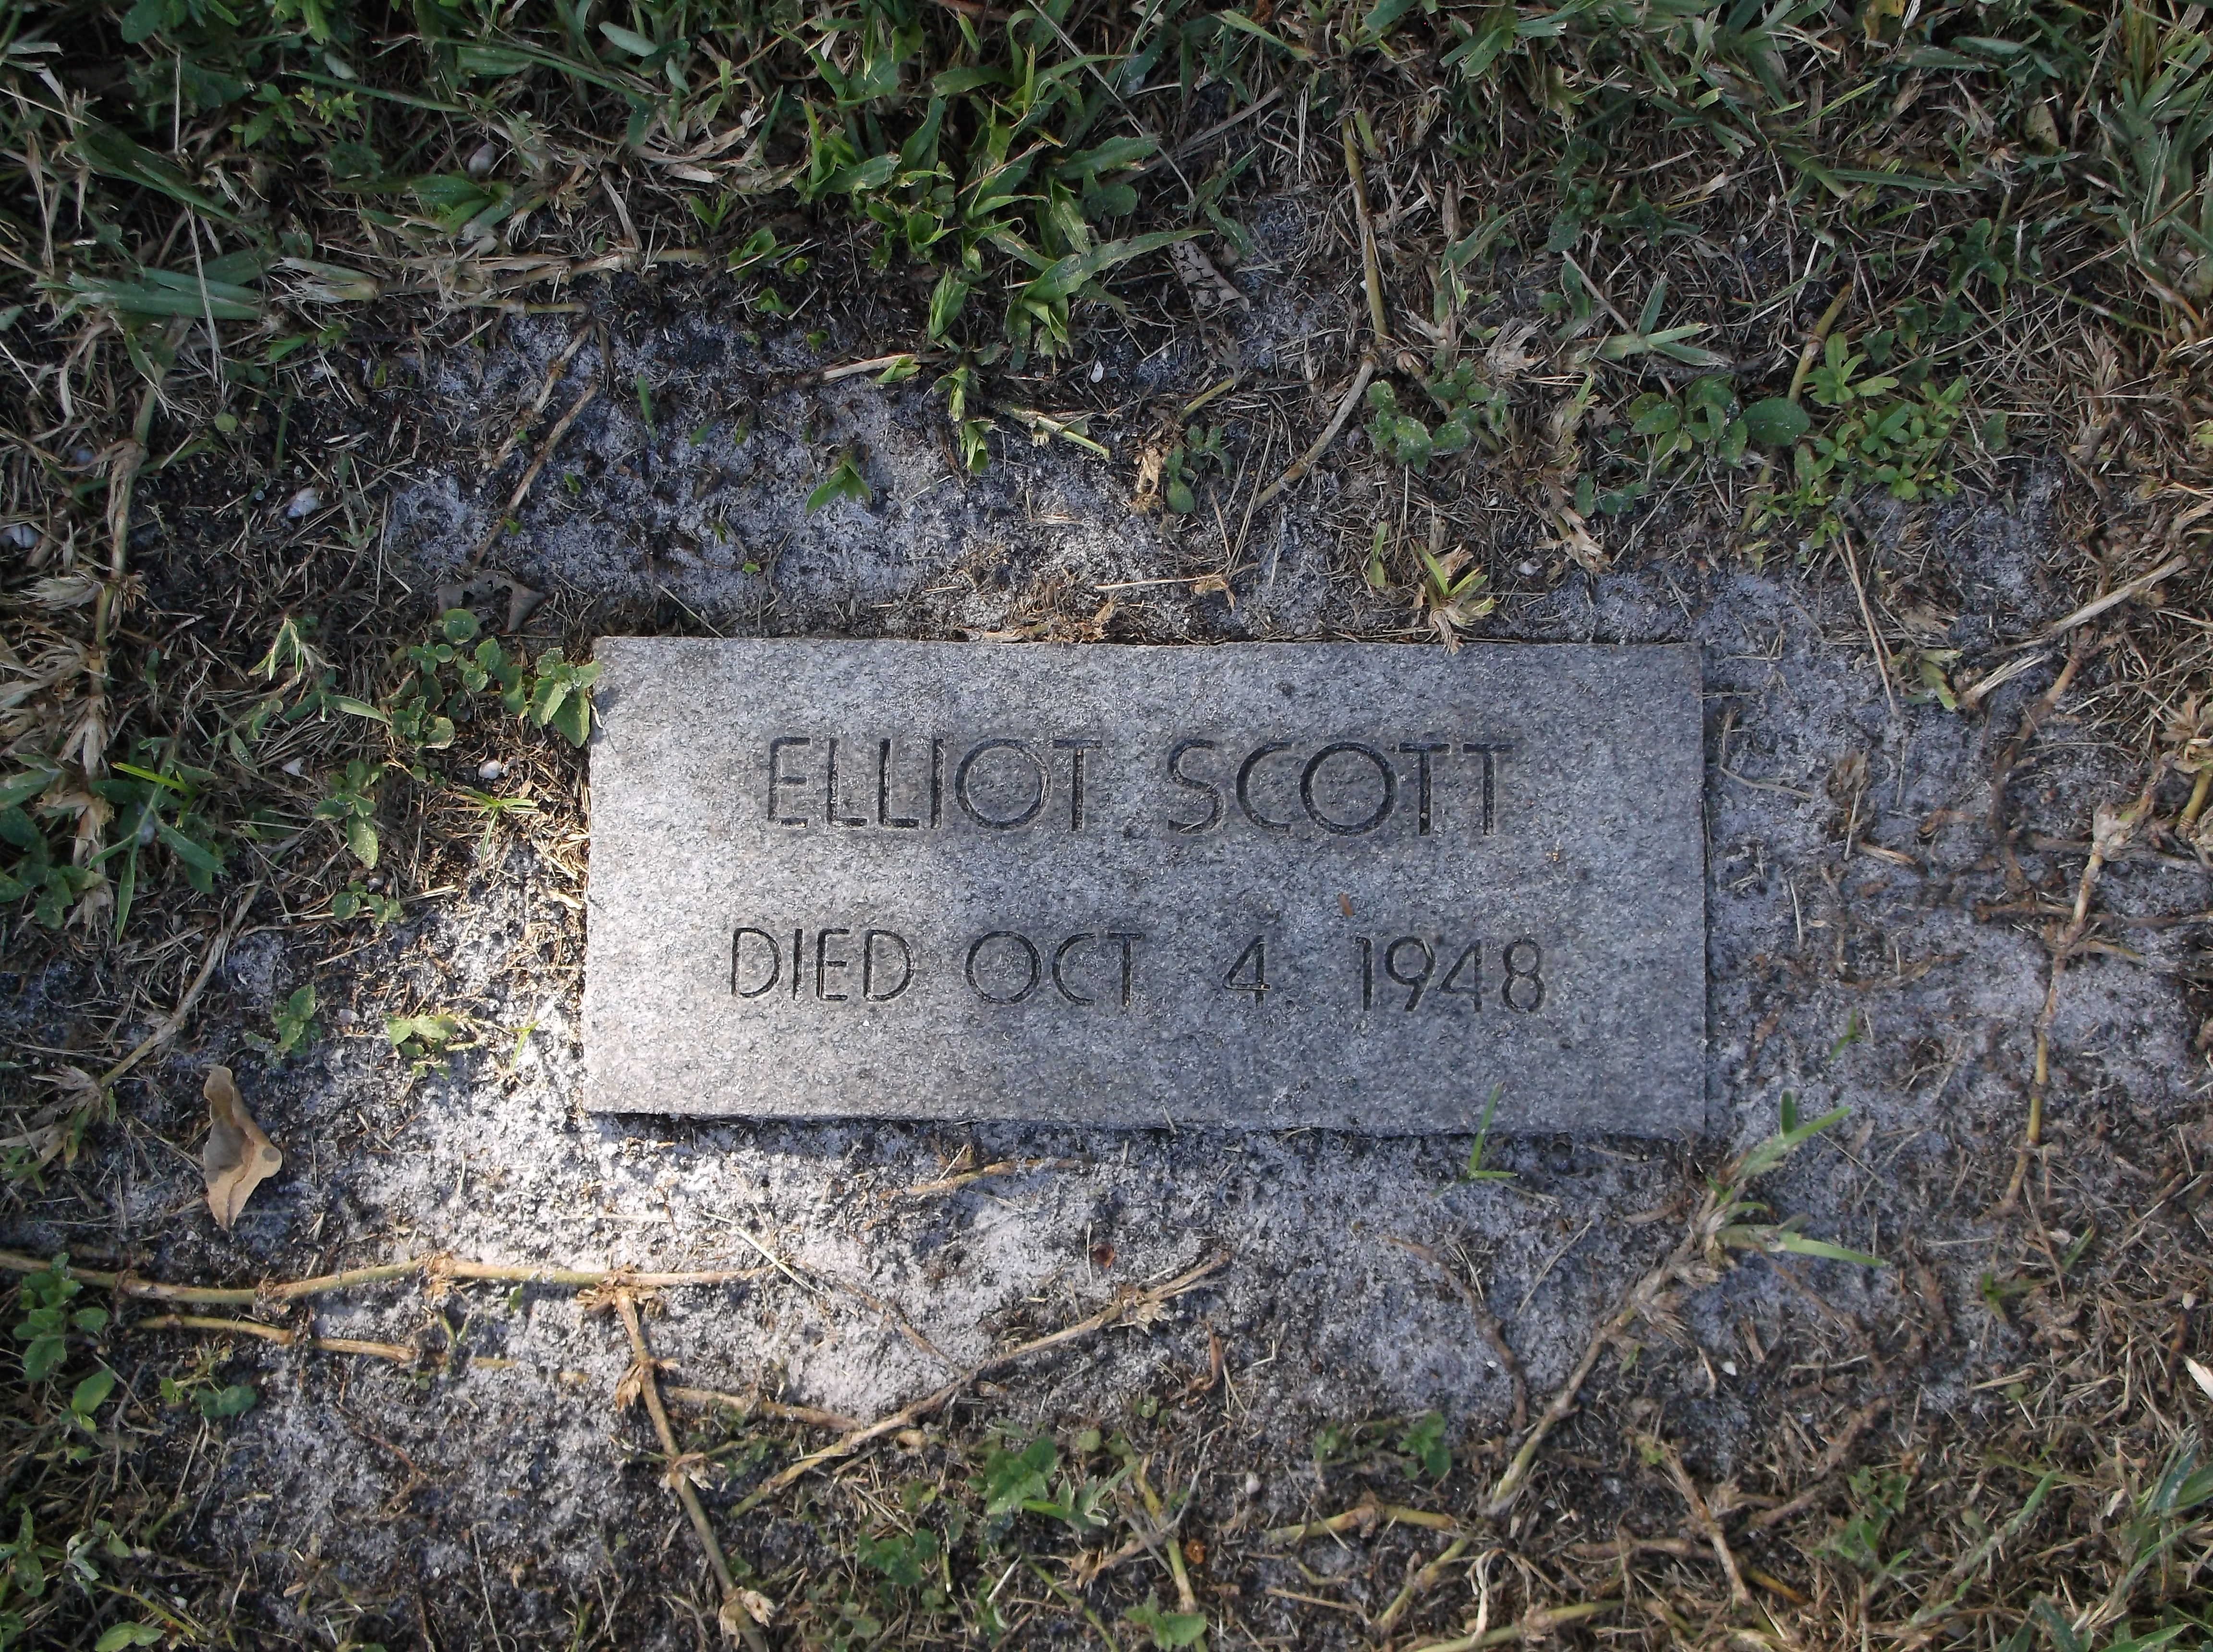 Elliot Scott